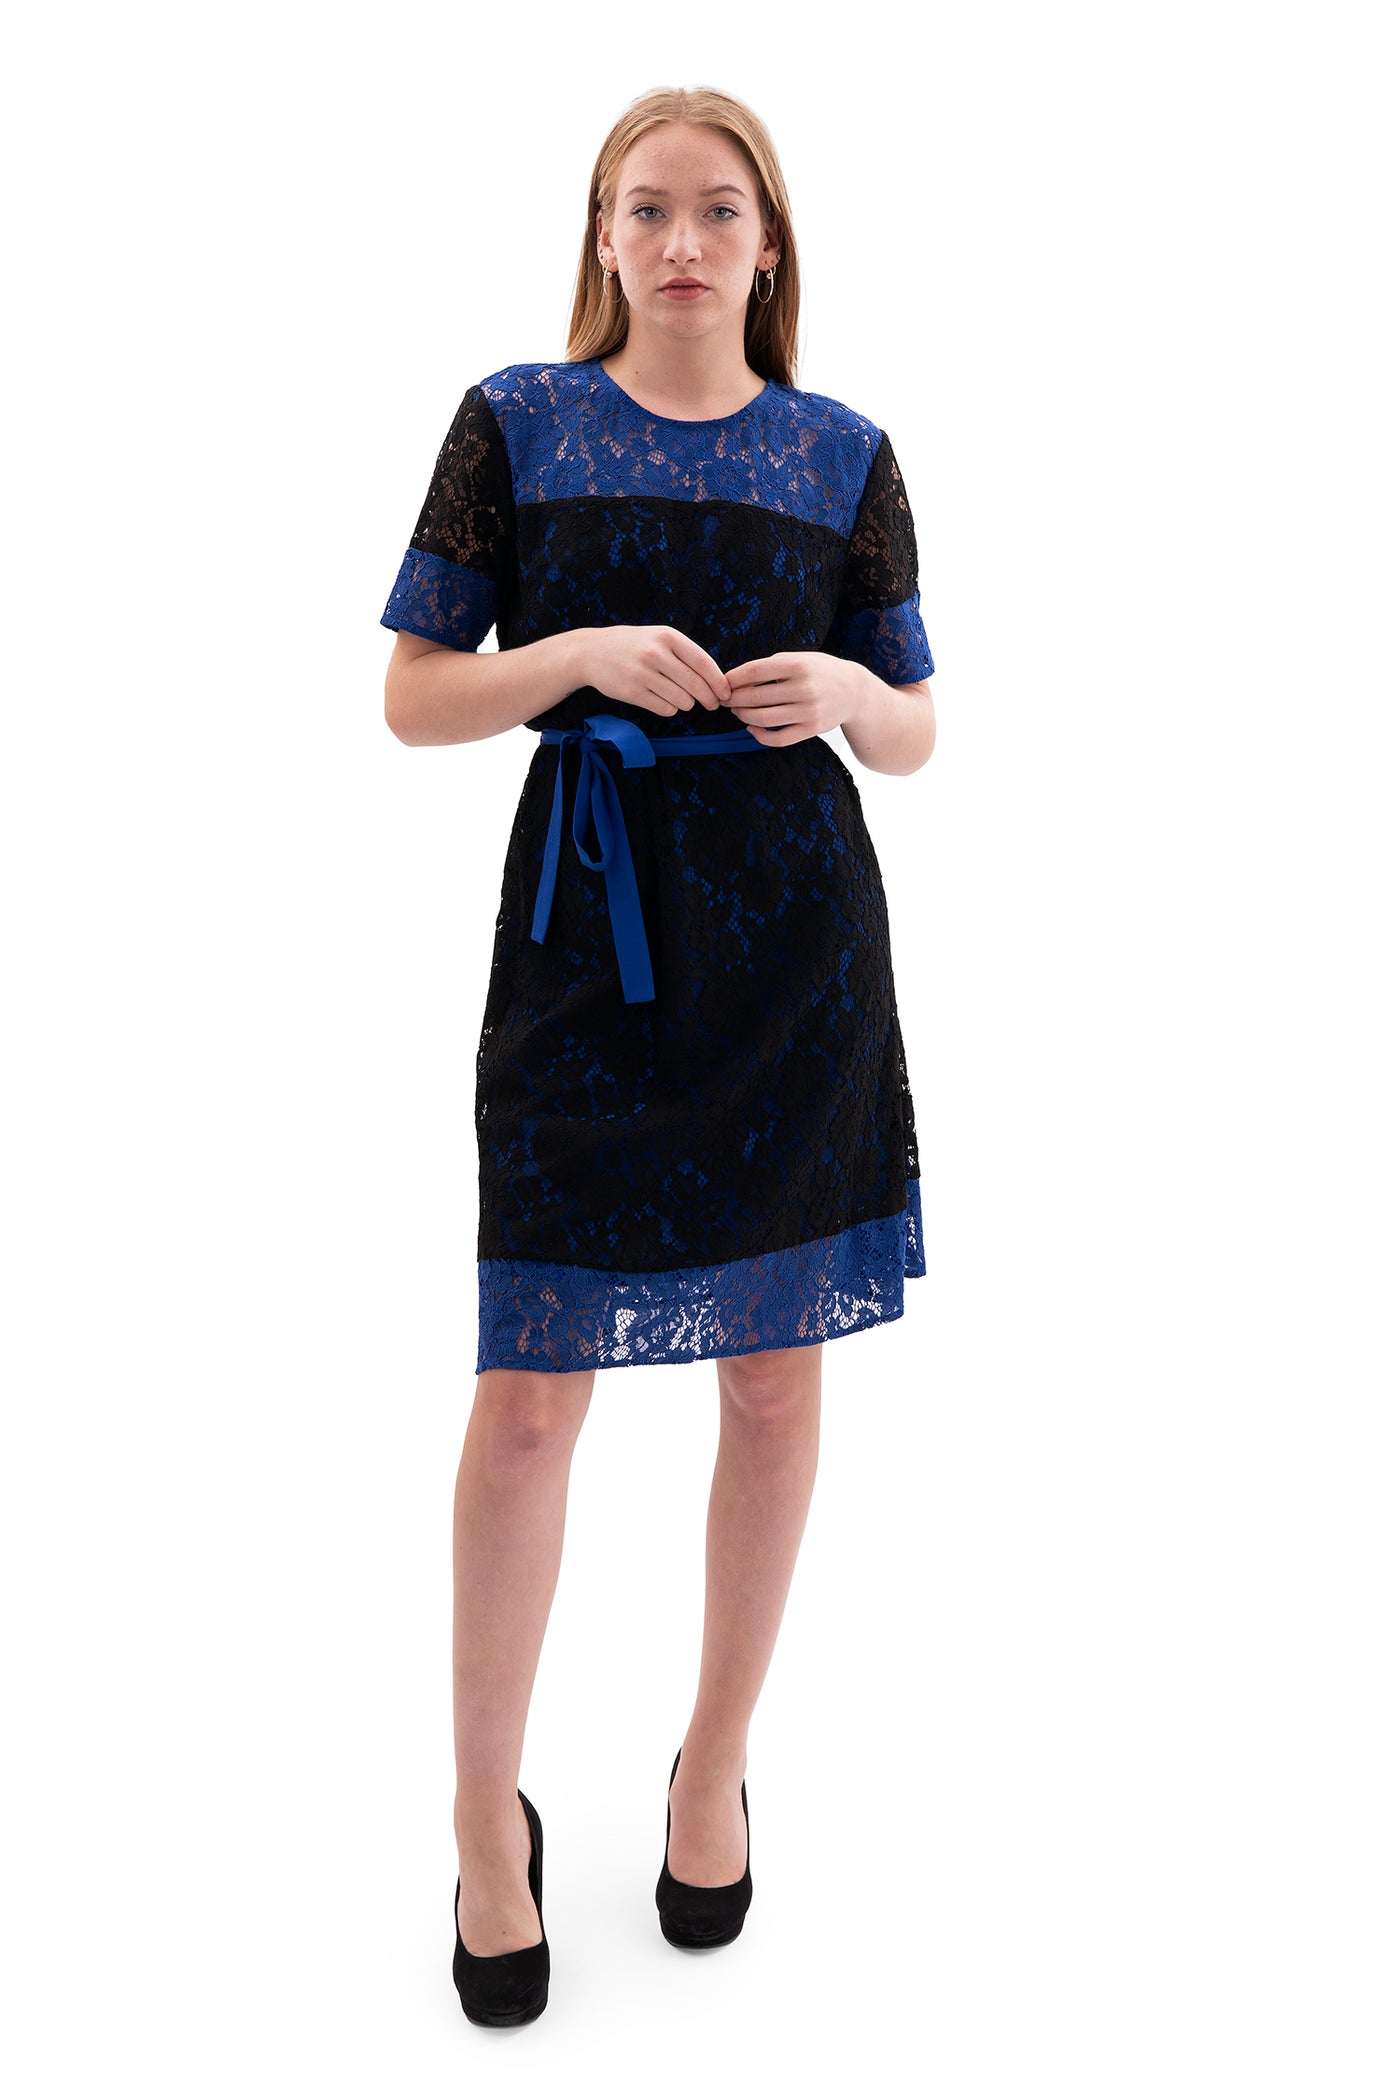 Paul Smith black and blue mini dress